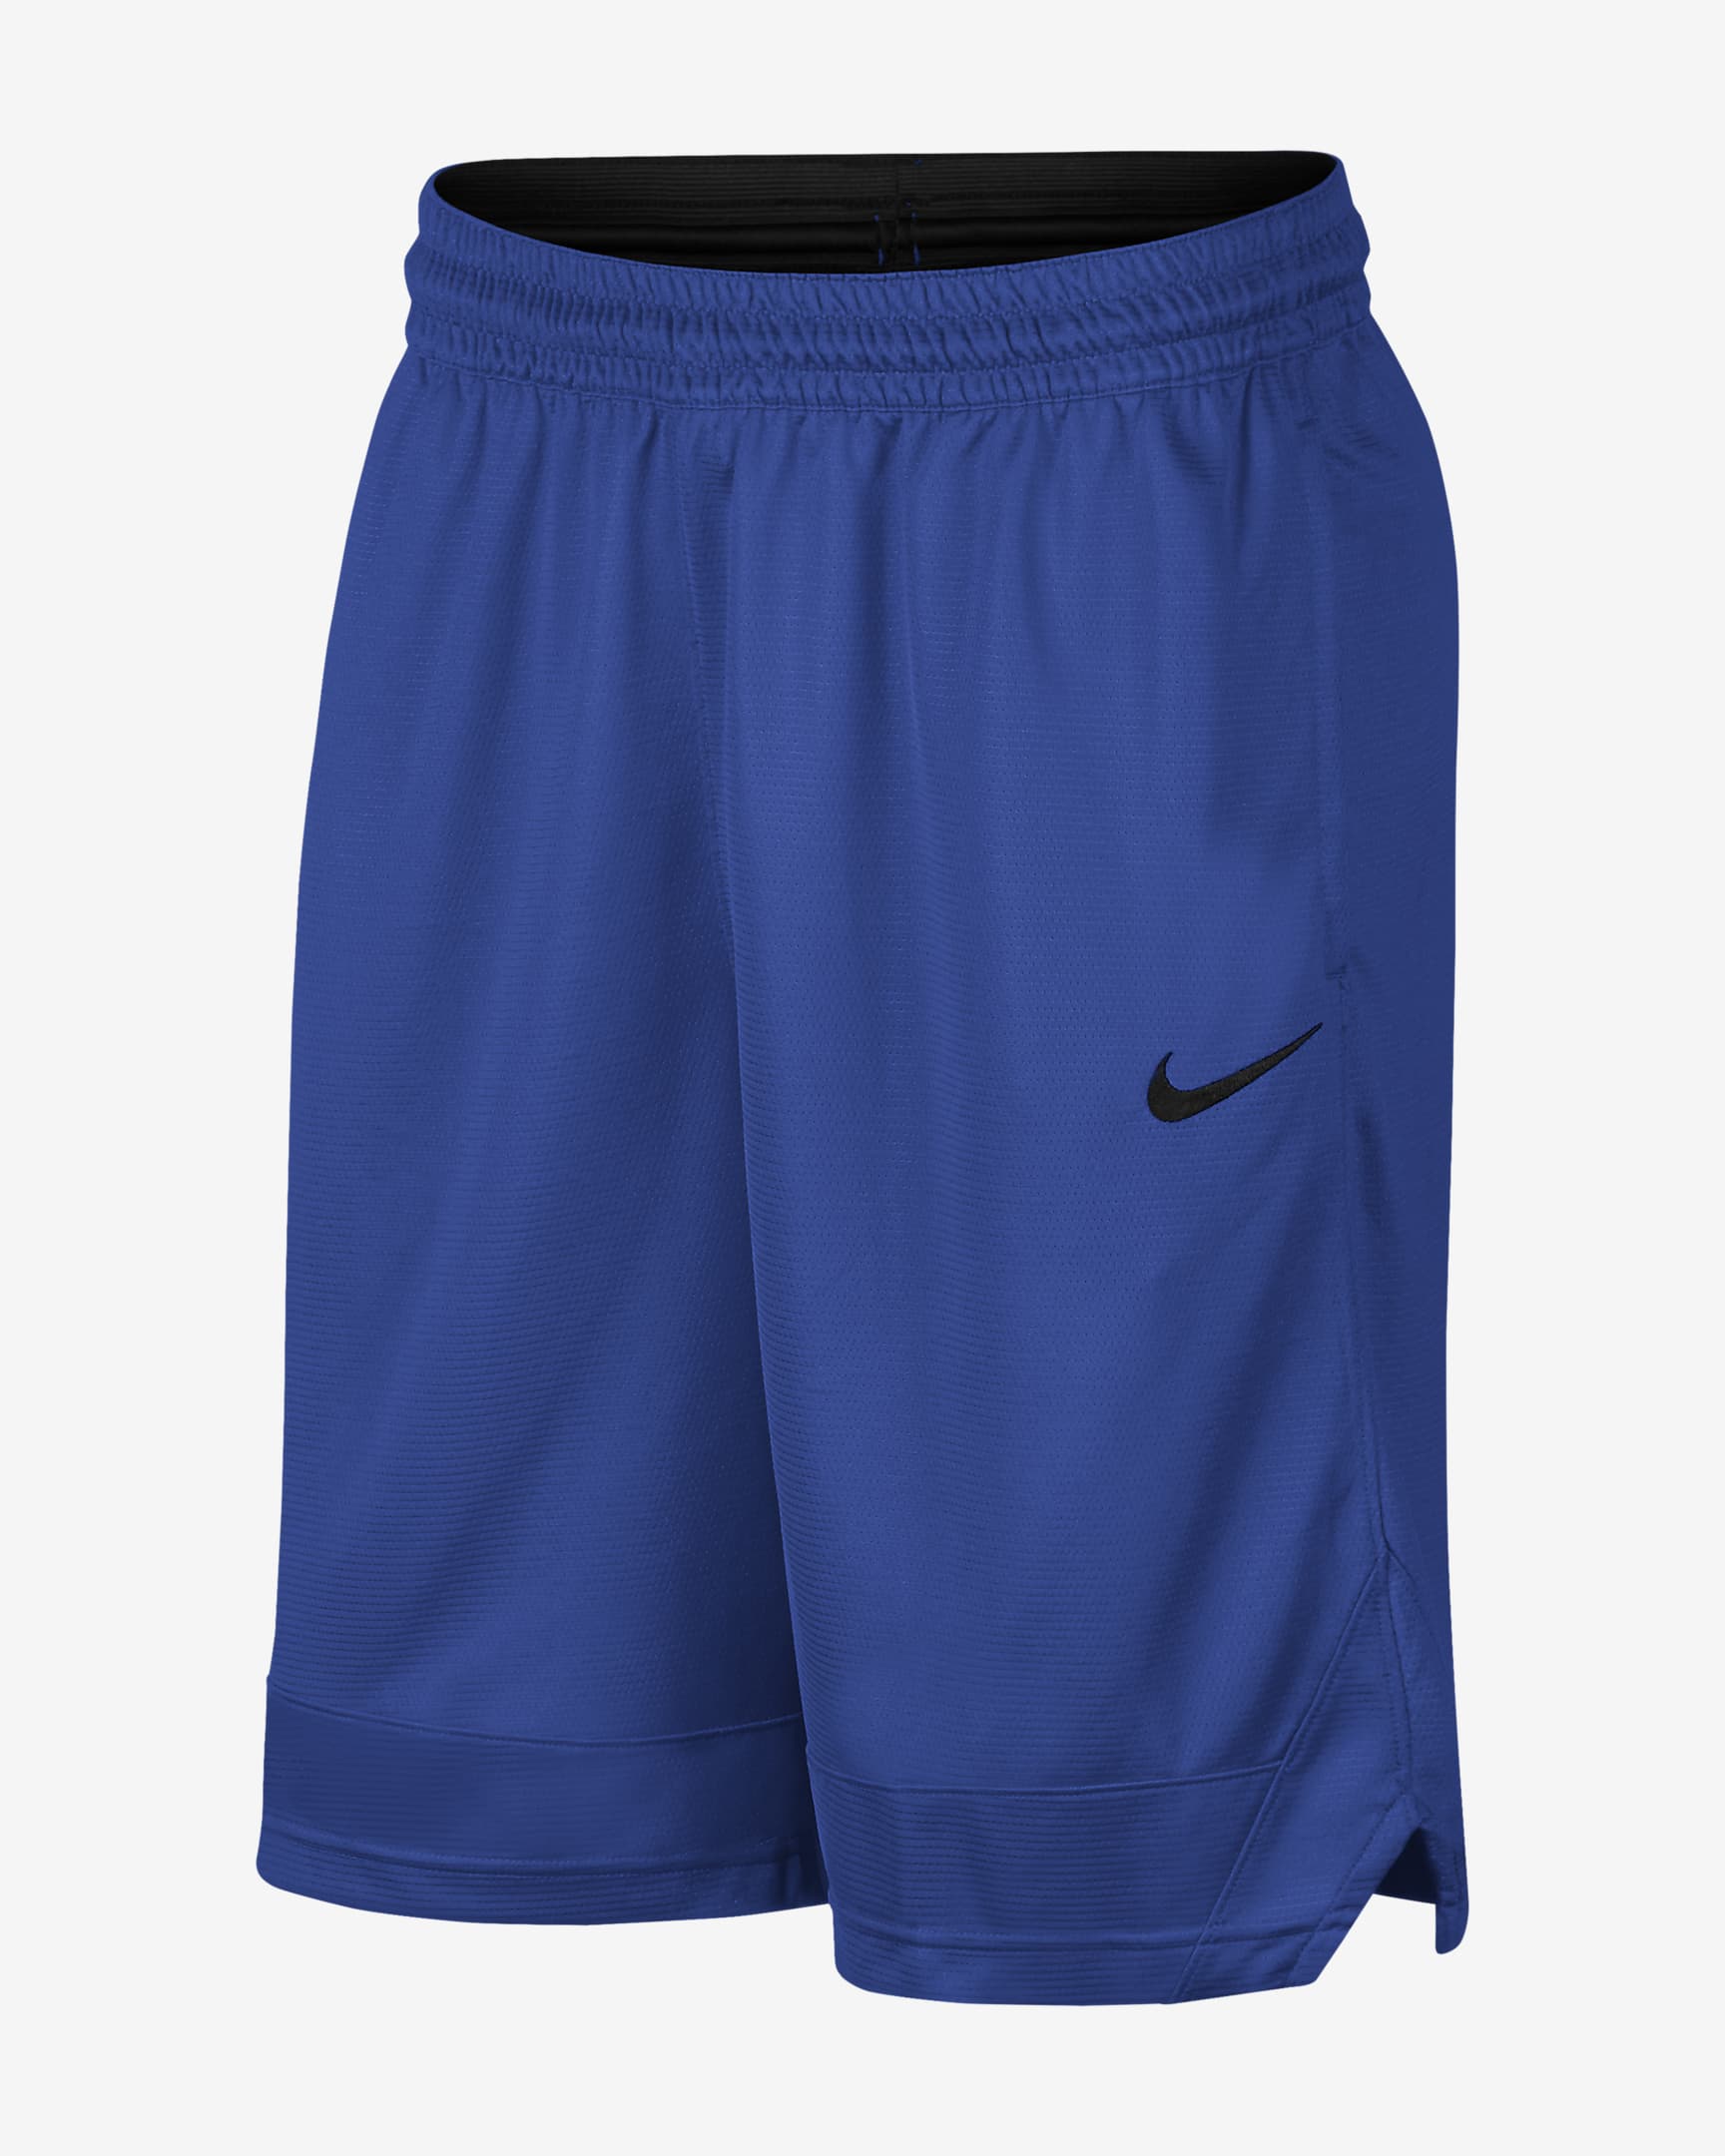 Баскетбольные шорты Nike Air. Шорты nike dri fit